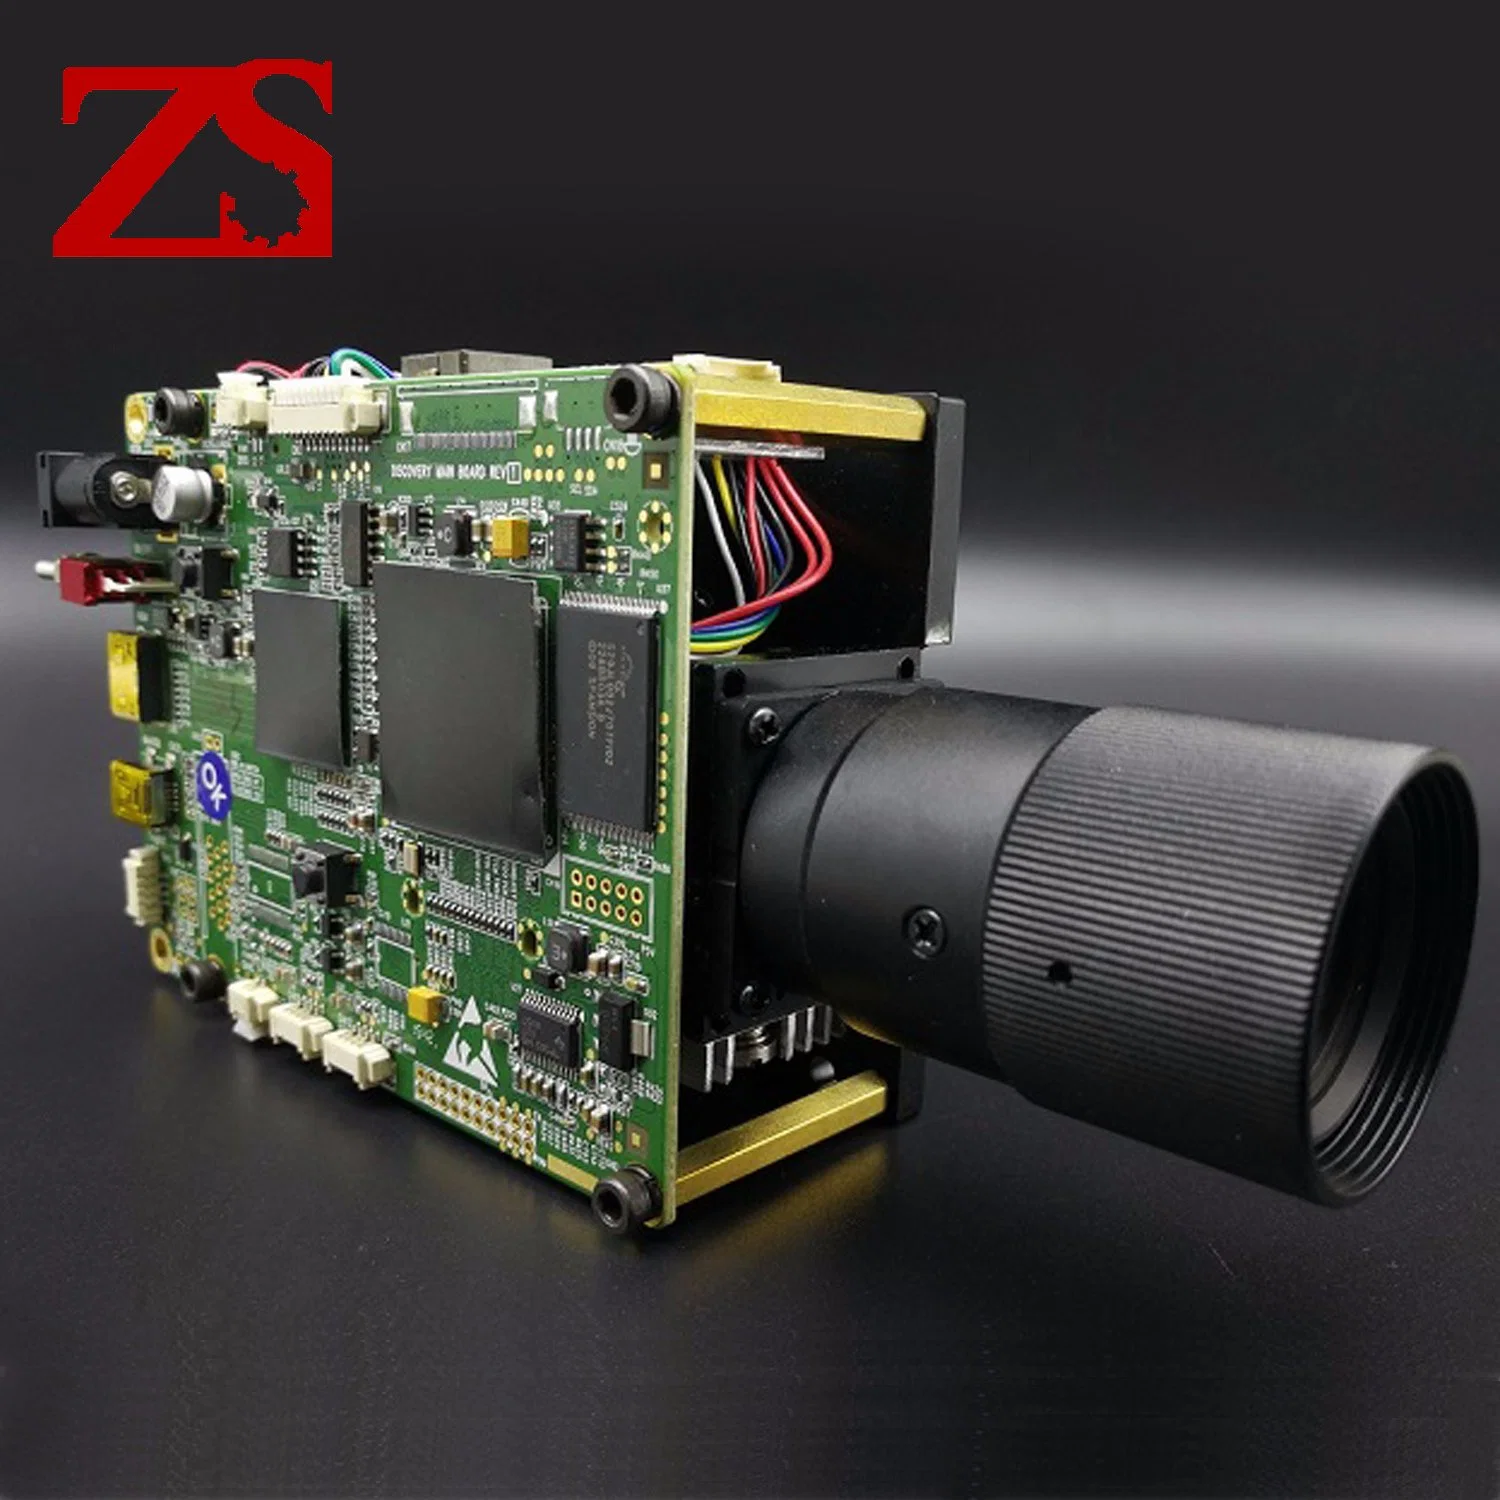 Zs Full HD 4K /1080P/2K Light Machine 405nm LED Projector